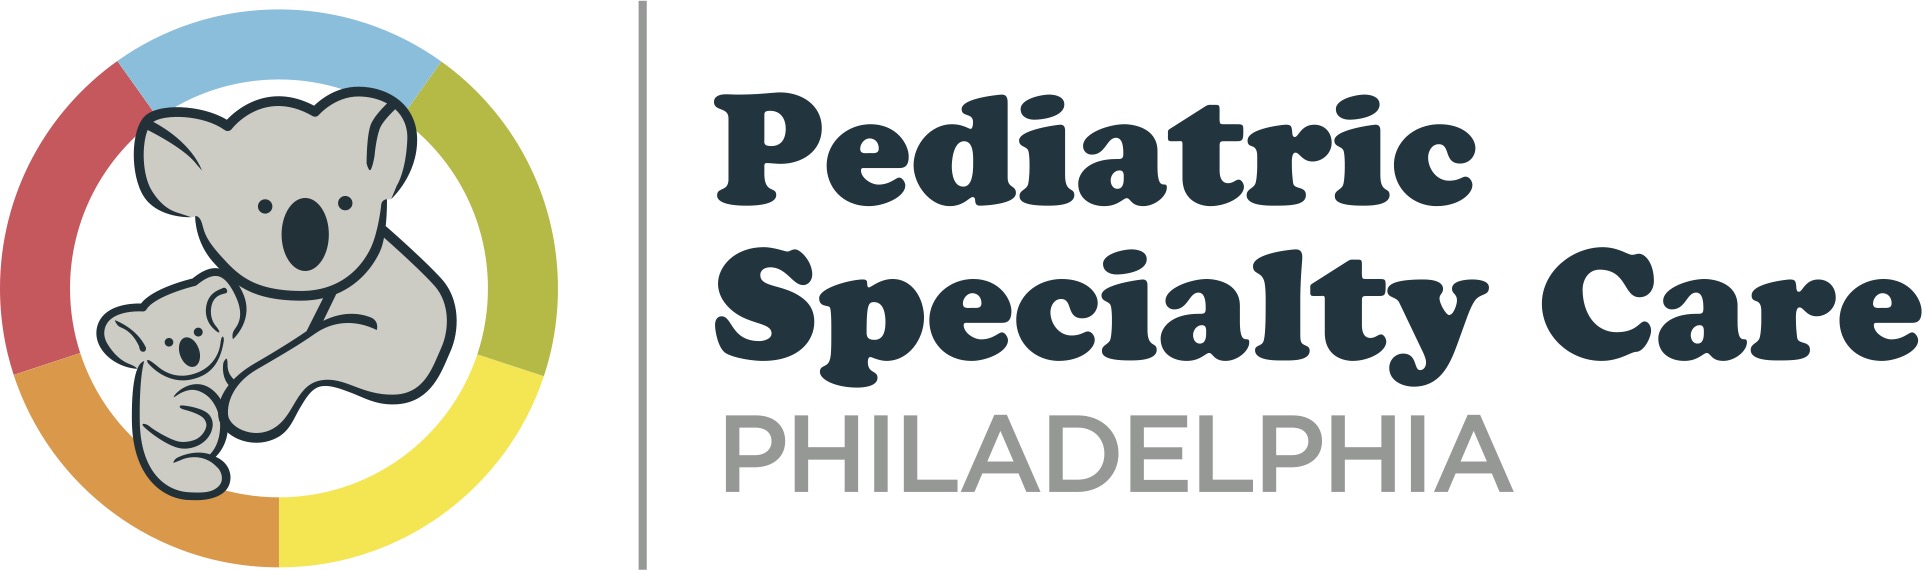 Philadelphia, PA - Pediatric Specialty Care | Location logo